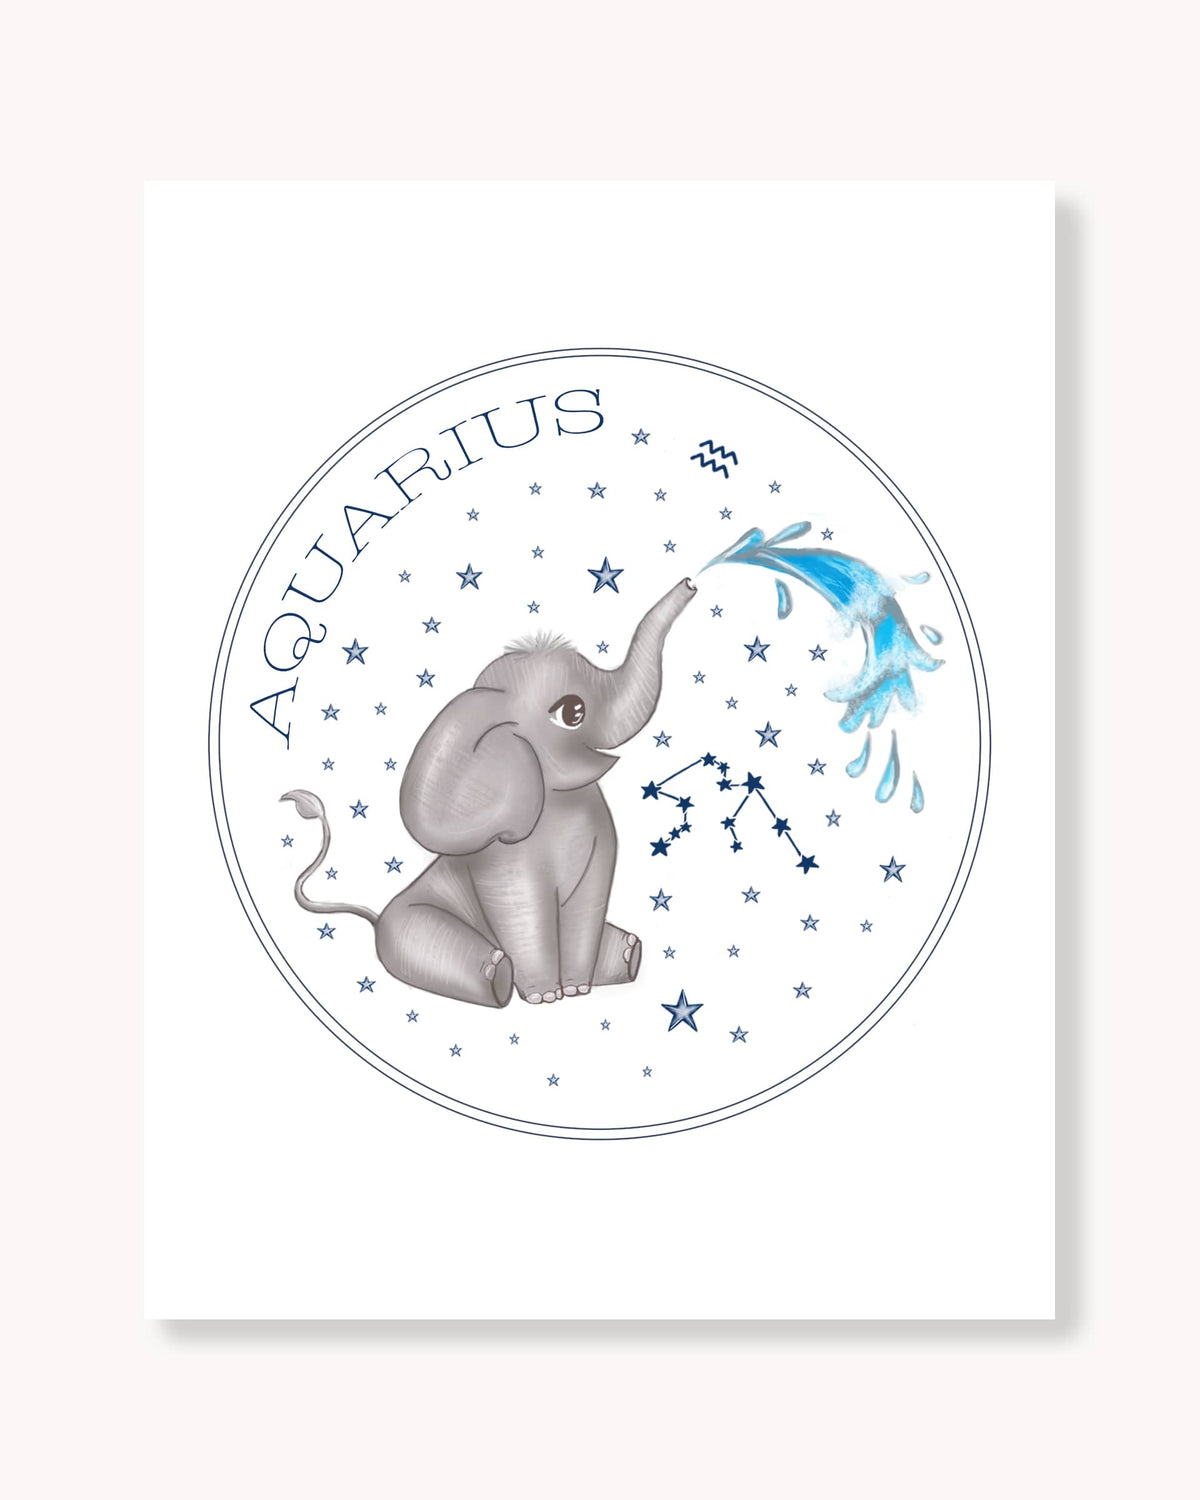 Hand drawn stars zodiac nursery decor wall art poster Aquarius cute baby elephant with water